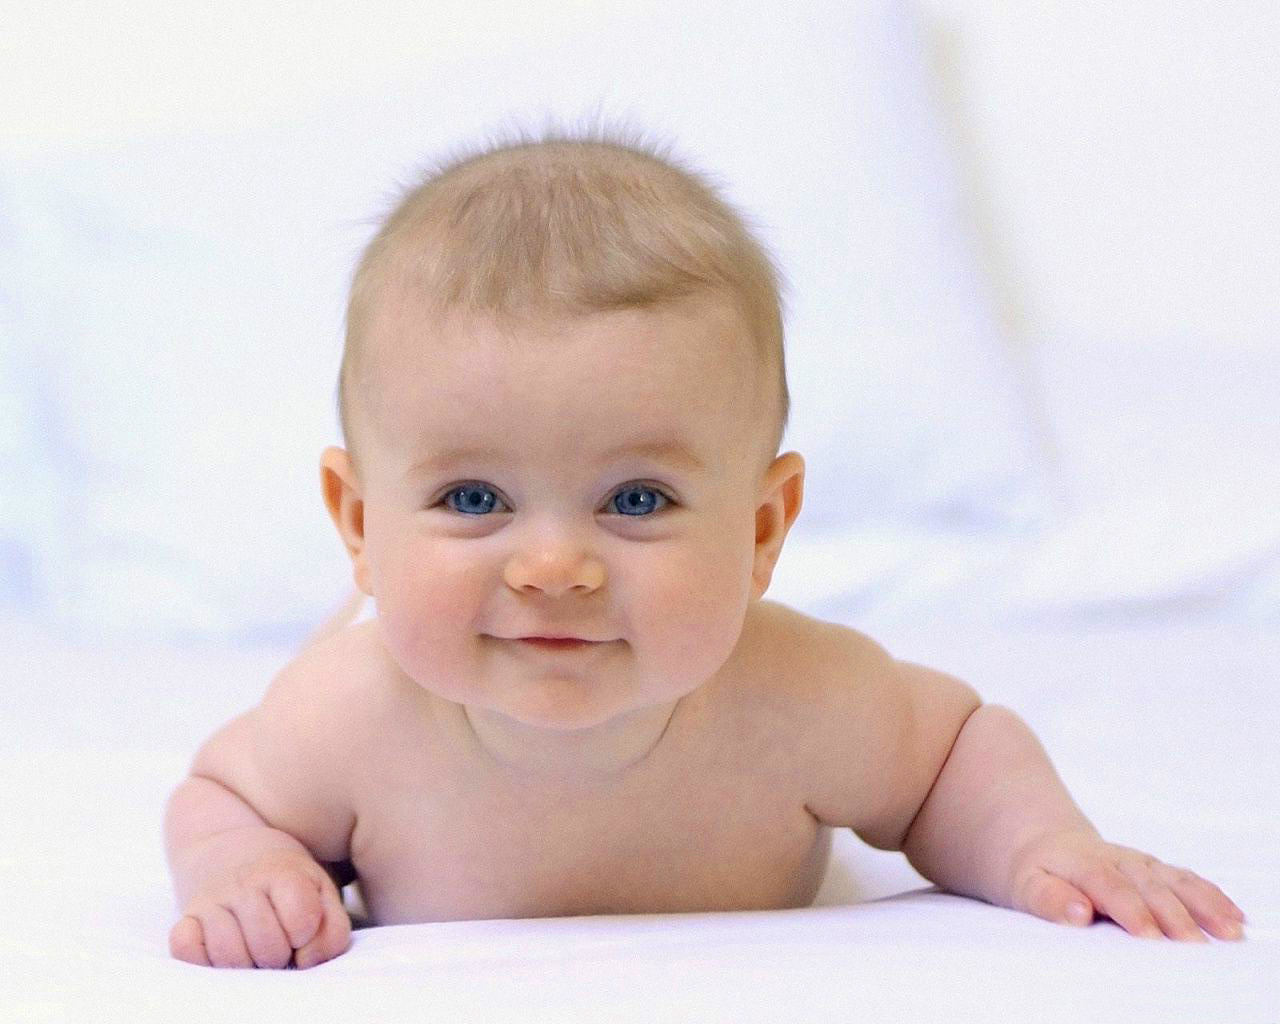 ... Cute Babies Smile Desktop Wallpapers HD | Free Web Design Resources